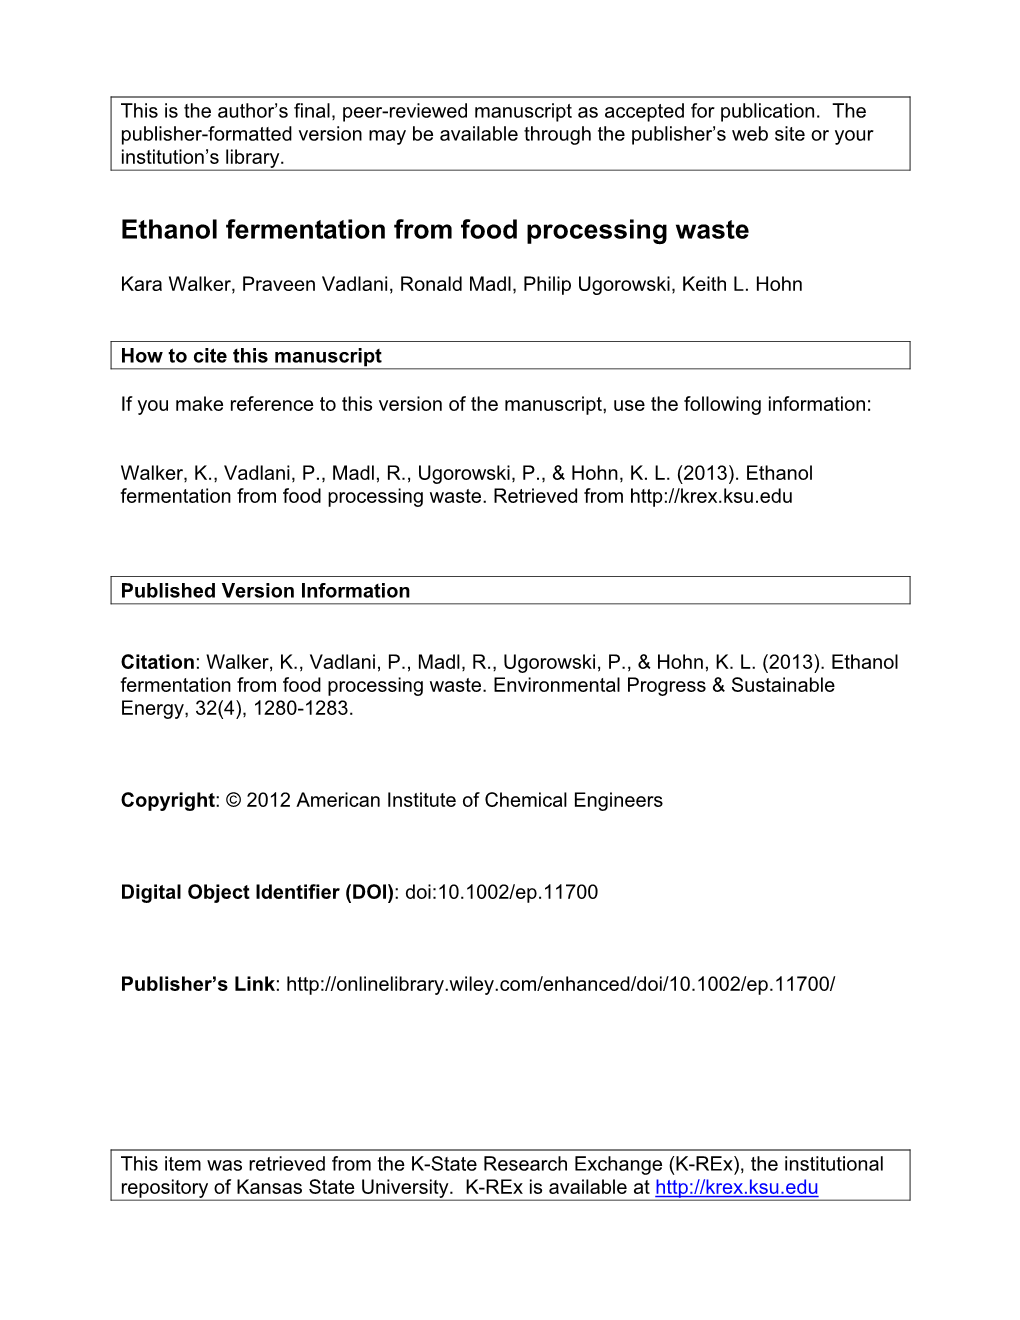 Ethanol Fermentation from Food Processing Waste